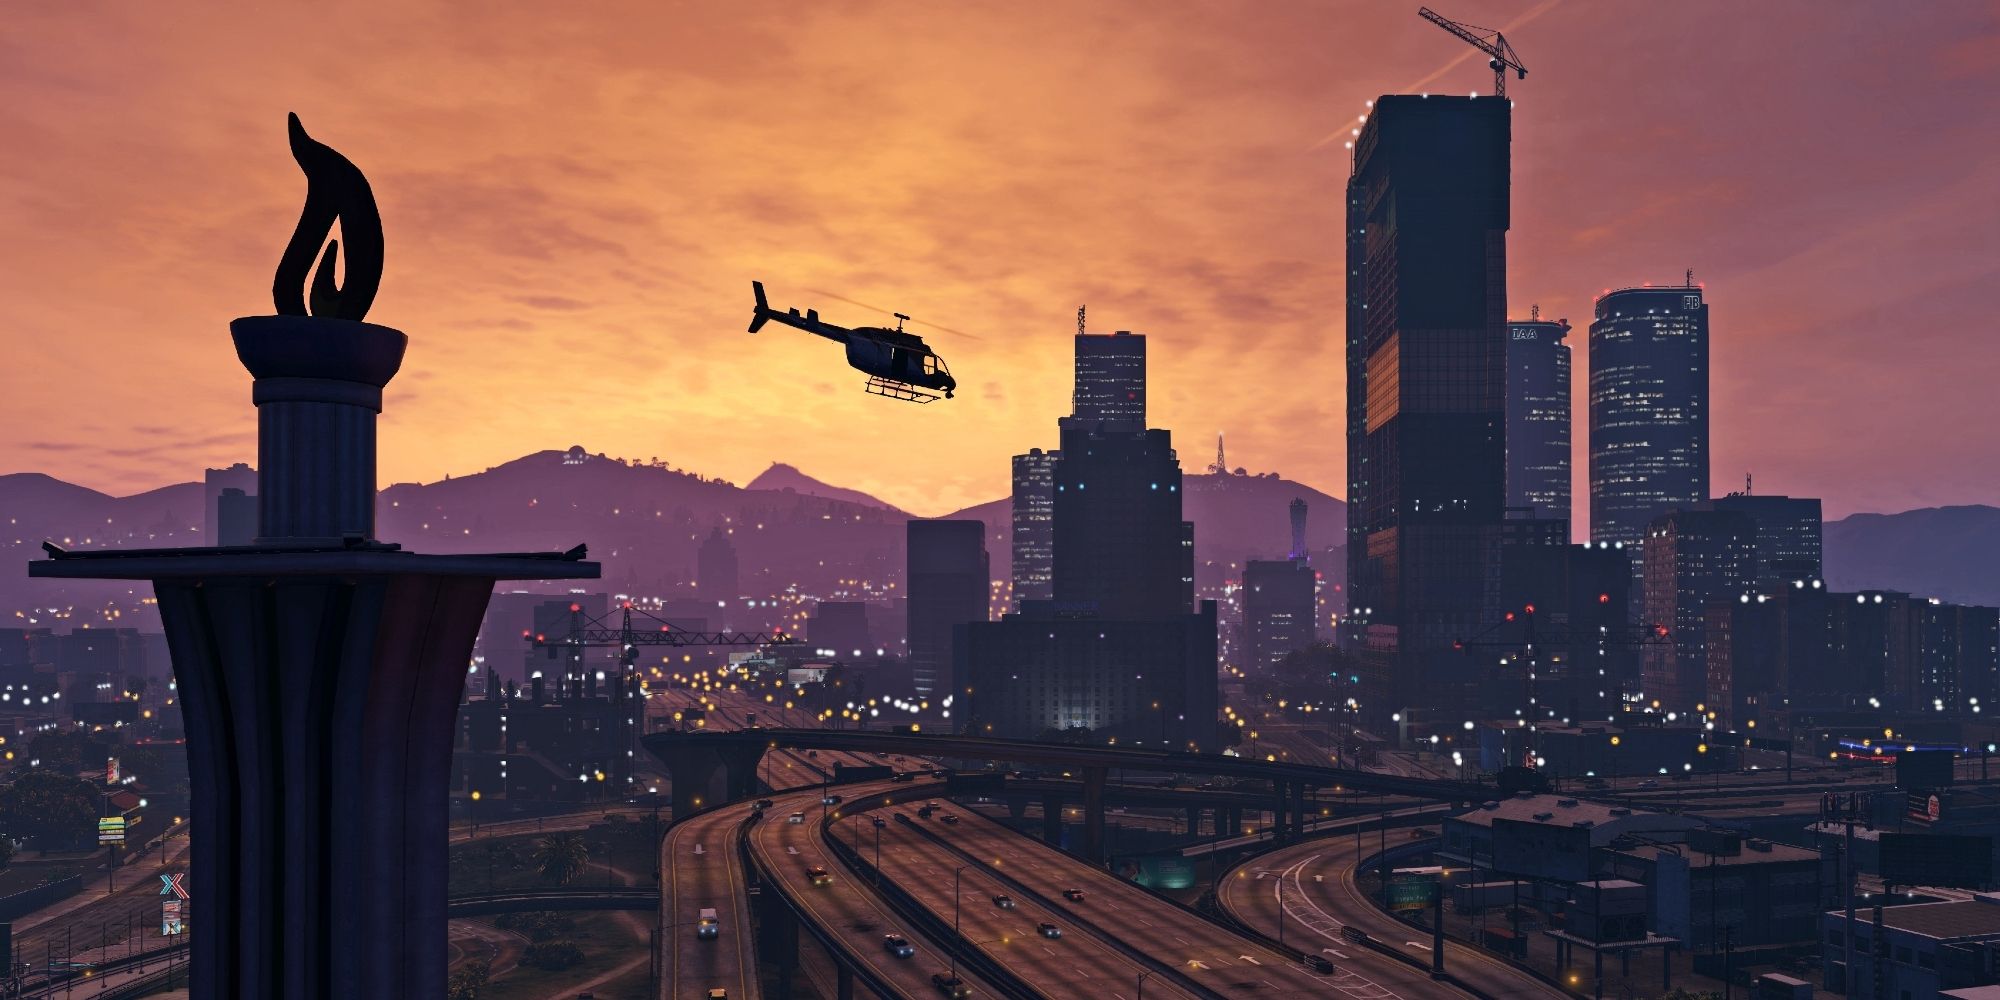 GTA skyline met helikopter die over de snelweg vliegt